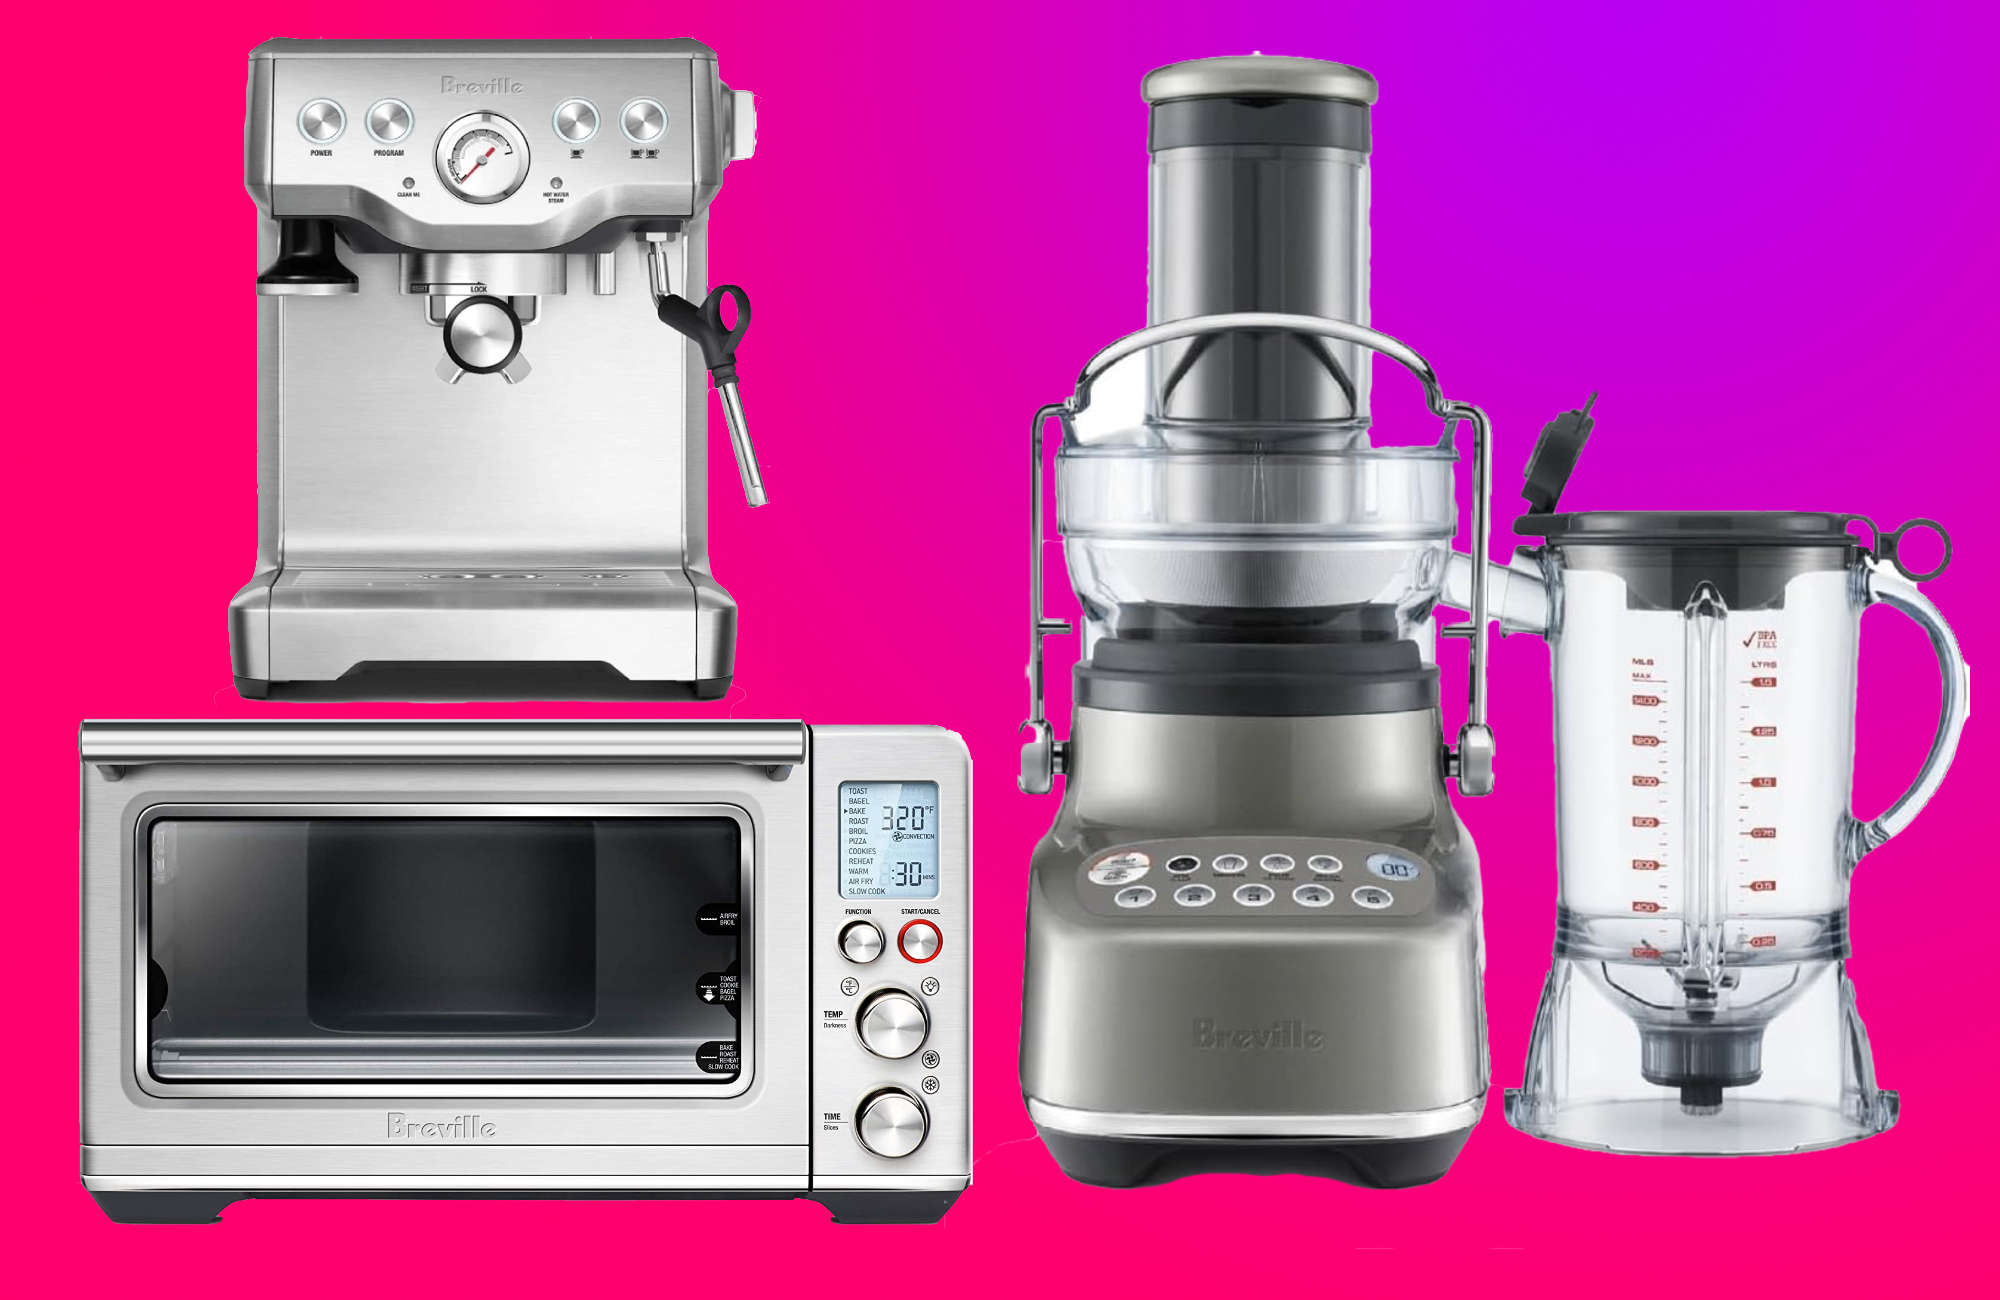 The best Breville kitchen appliance Prime Day deals